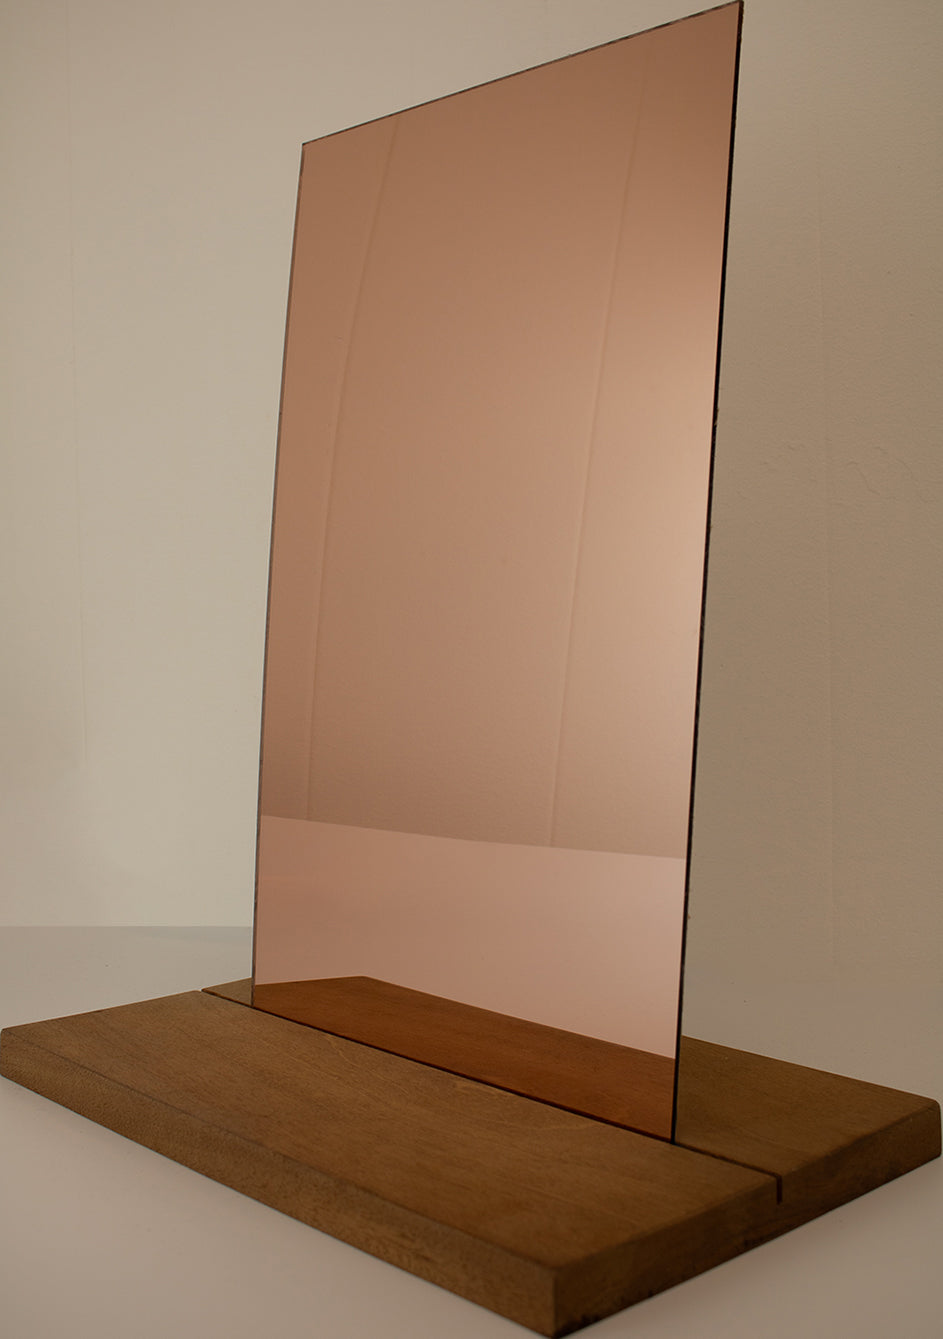 1/8 Acrylic Mirror Sheet,Rose Gold 12 x 12 Mirrored Acrylic Lucite  Plexiglass Sheet (Actual Size 11.875 x 11.875)